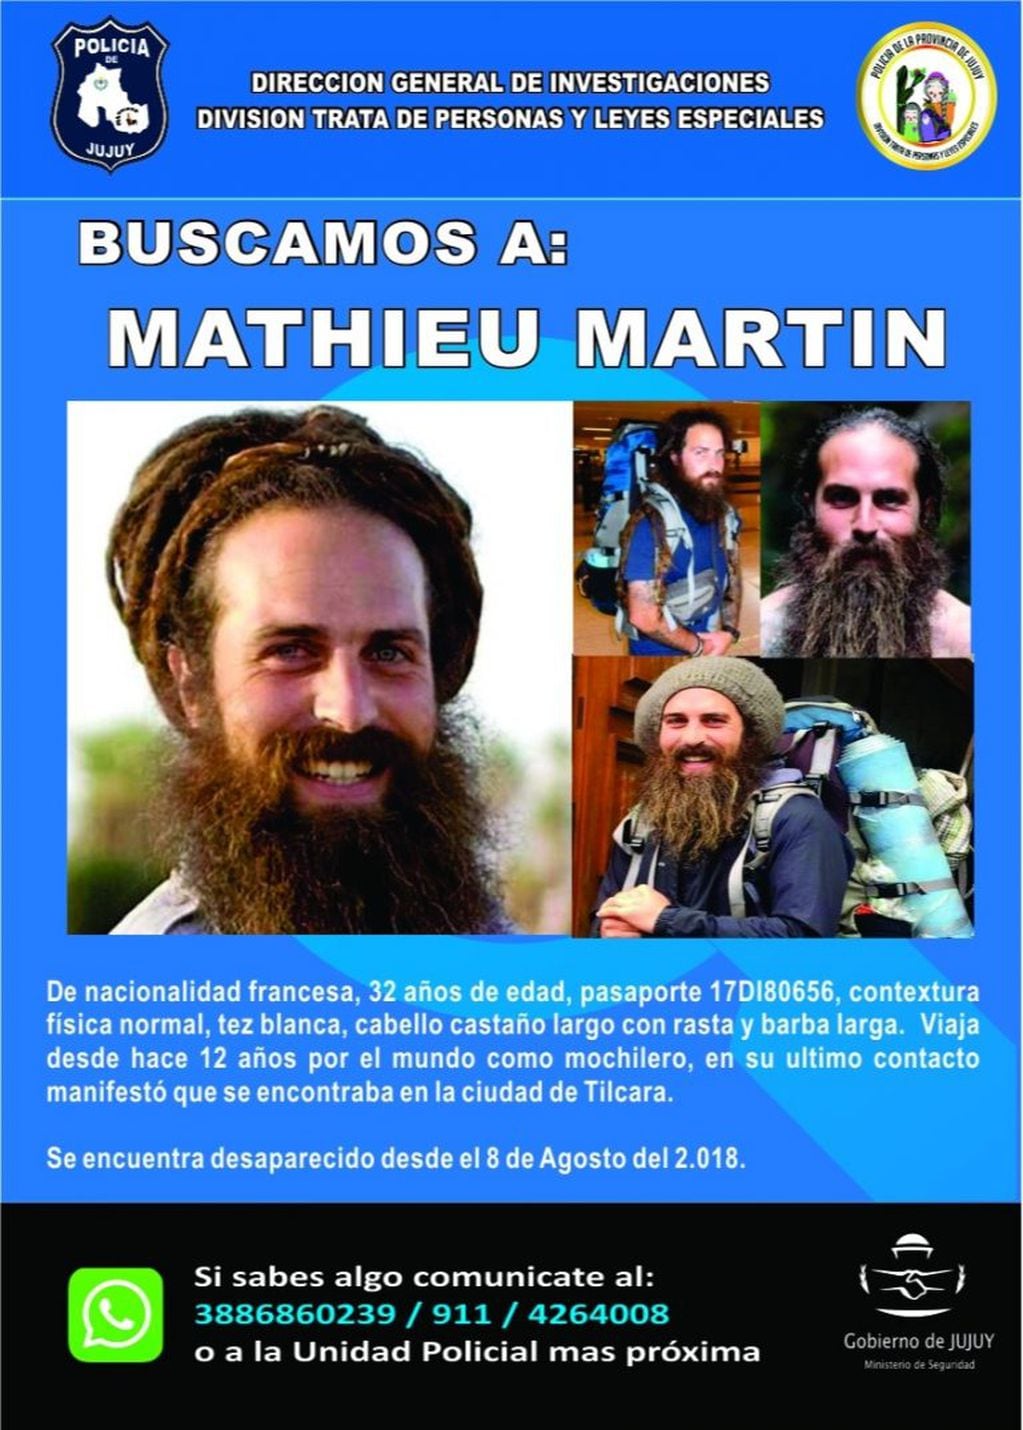 La Policía de la Provincia de Jujuy emitió la alerta de búsqueda de Mathieu Martin, el mochilero francés.